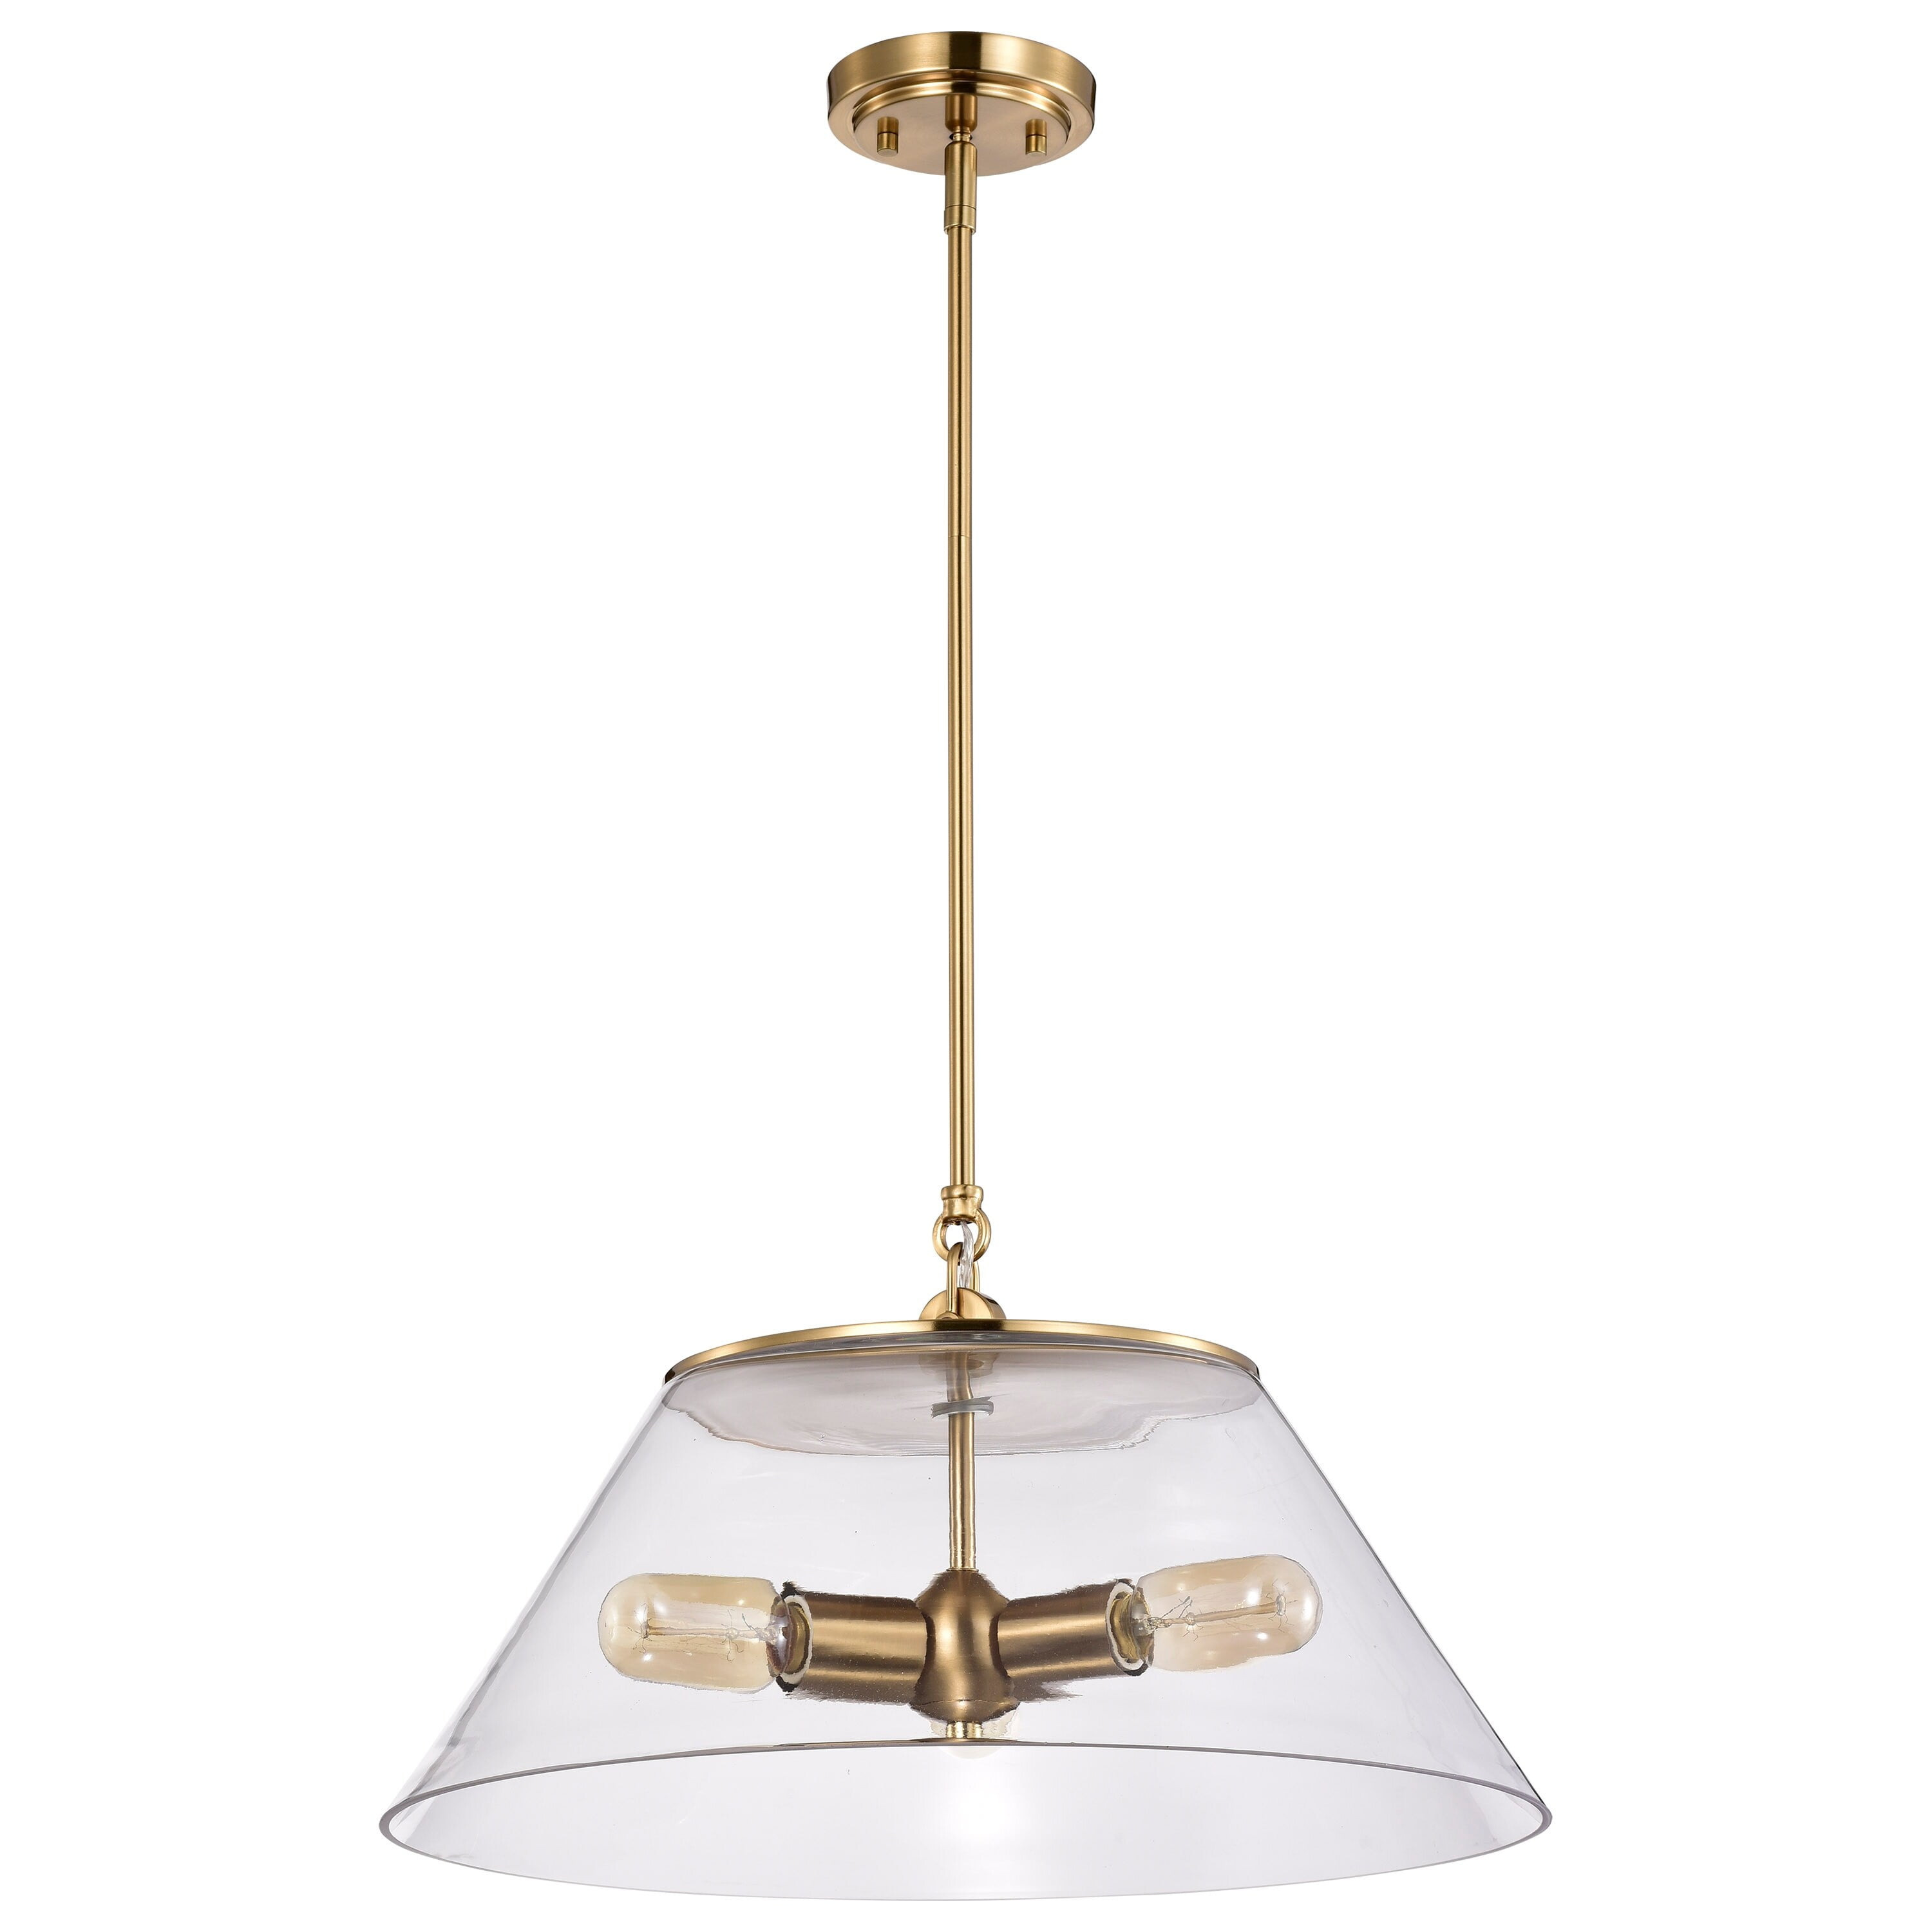 Electric Hurricane Lamp w/shade - Antique Brass Equinox 19